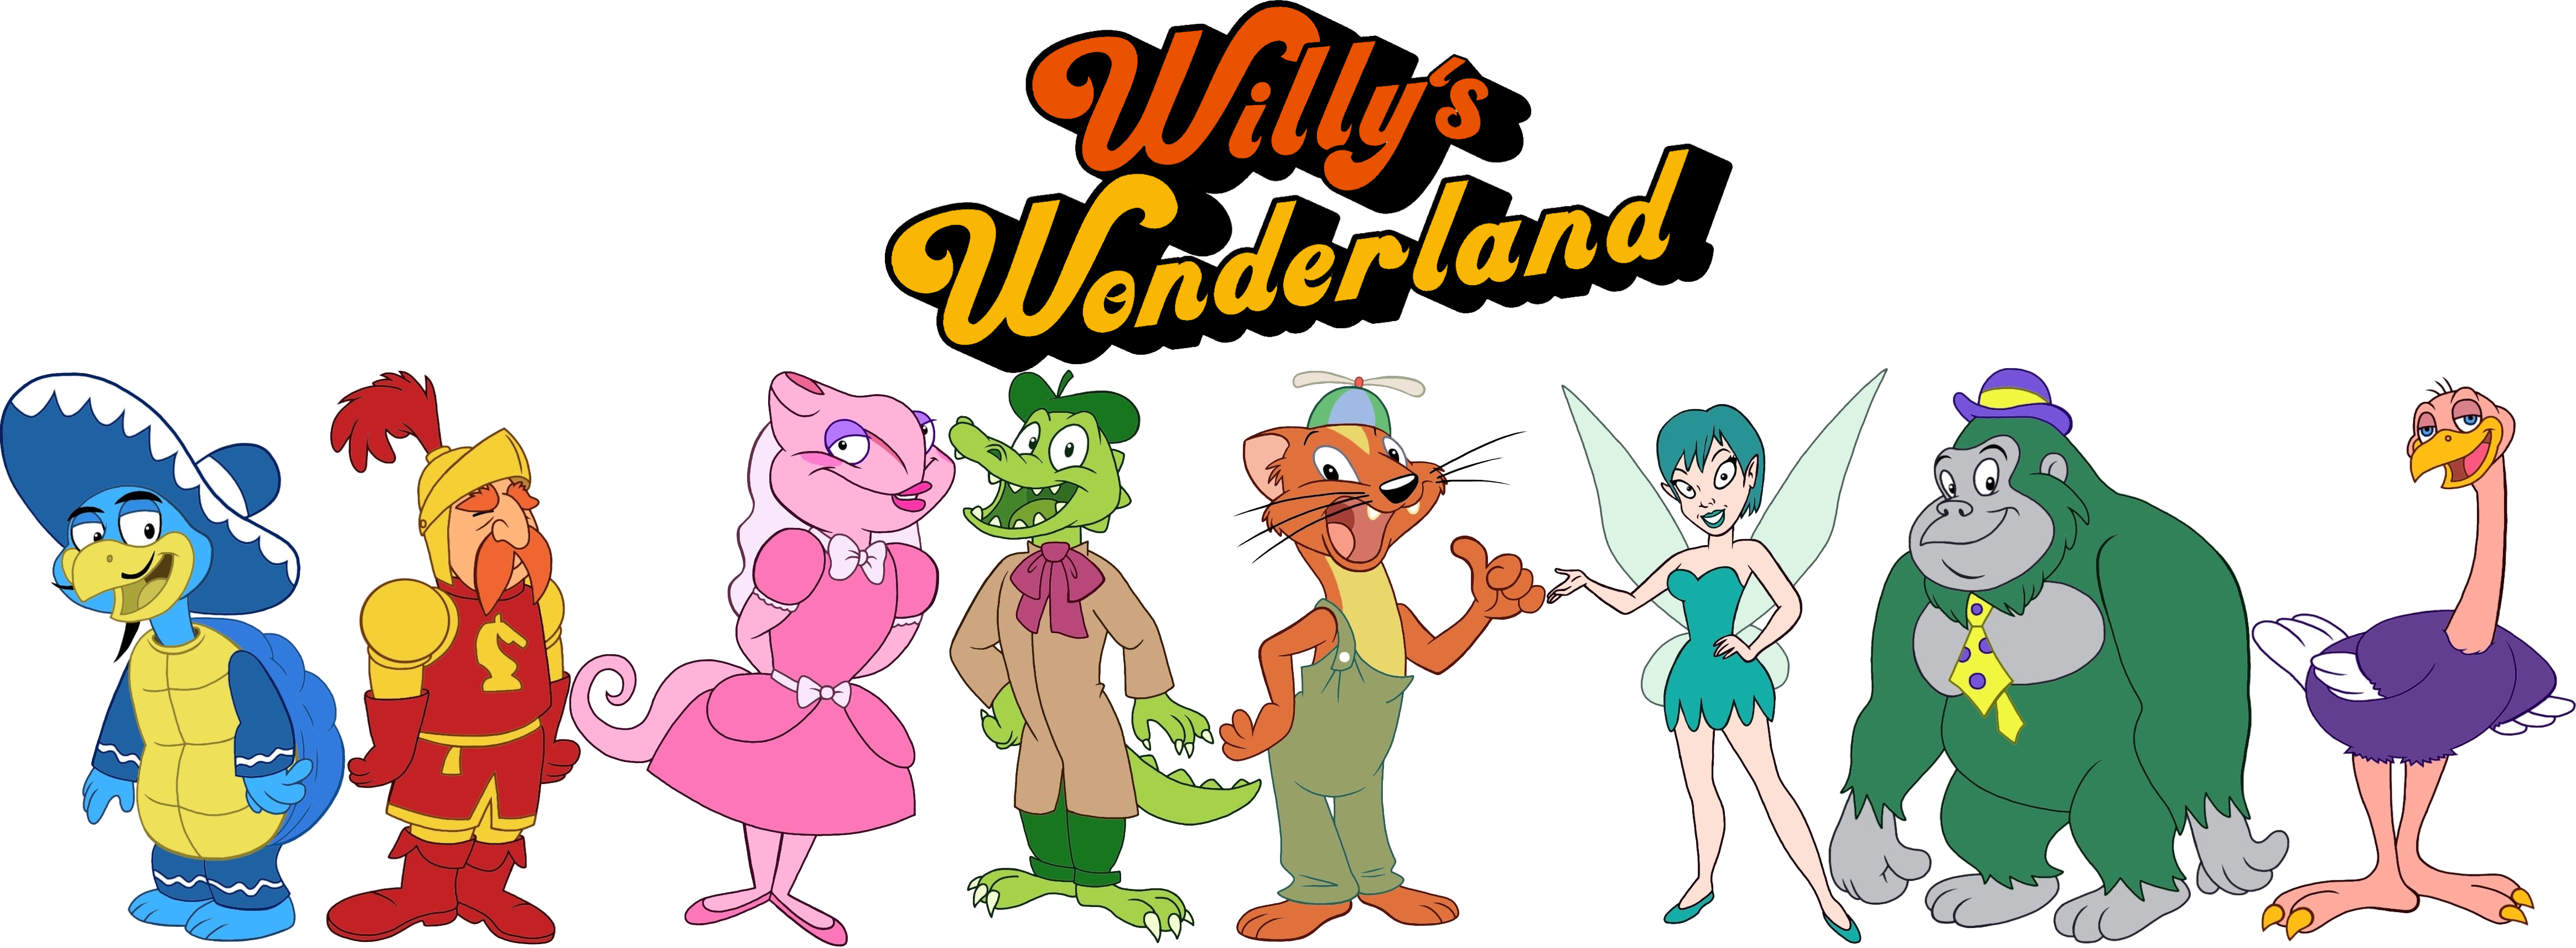 Willy's Wonderland Blender Renders PNG by MauricioToro2006 on DeviantArt